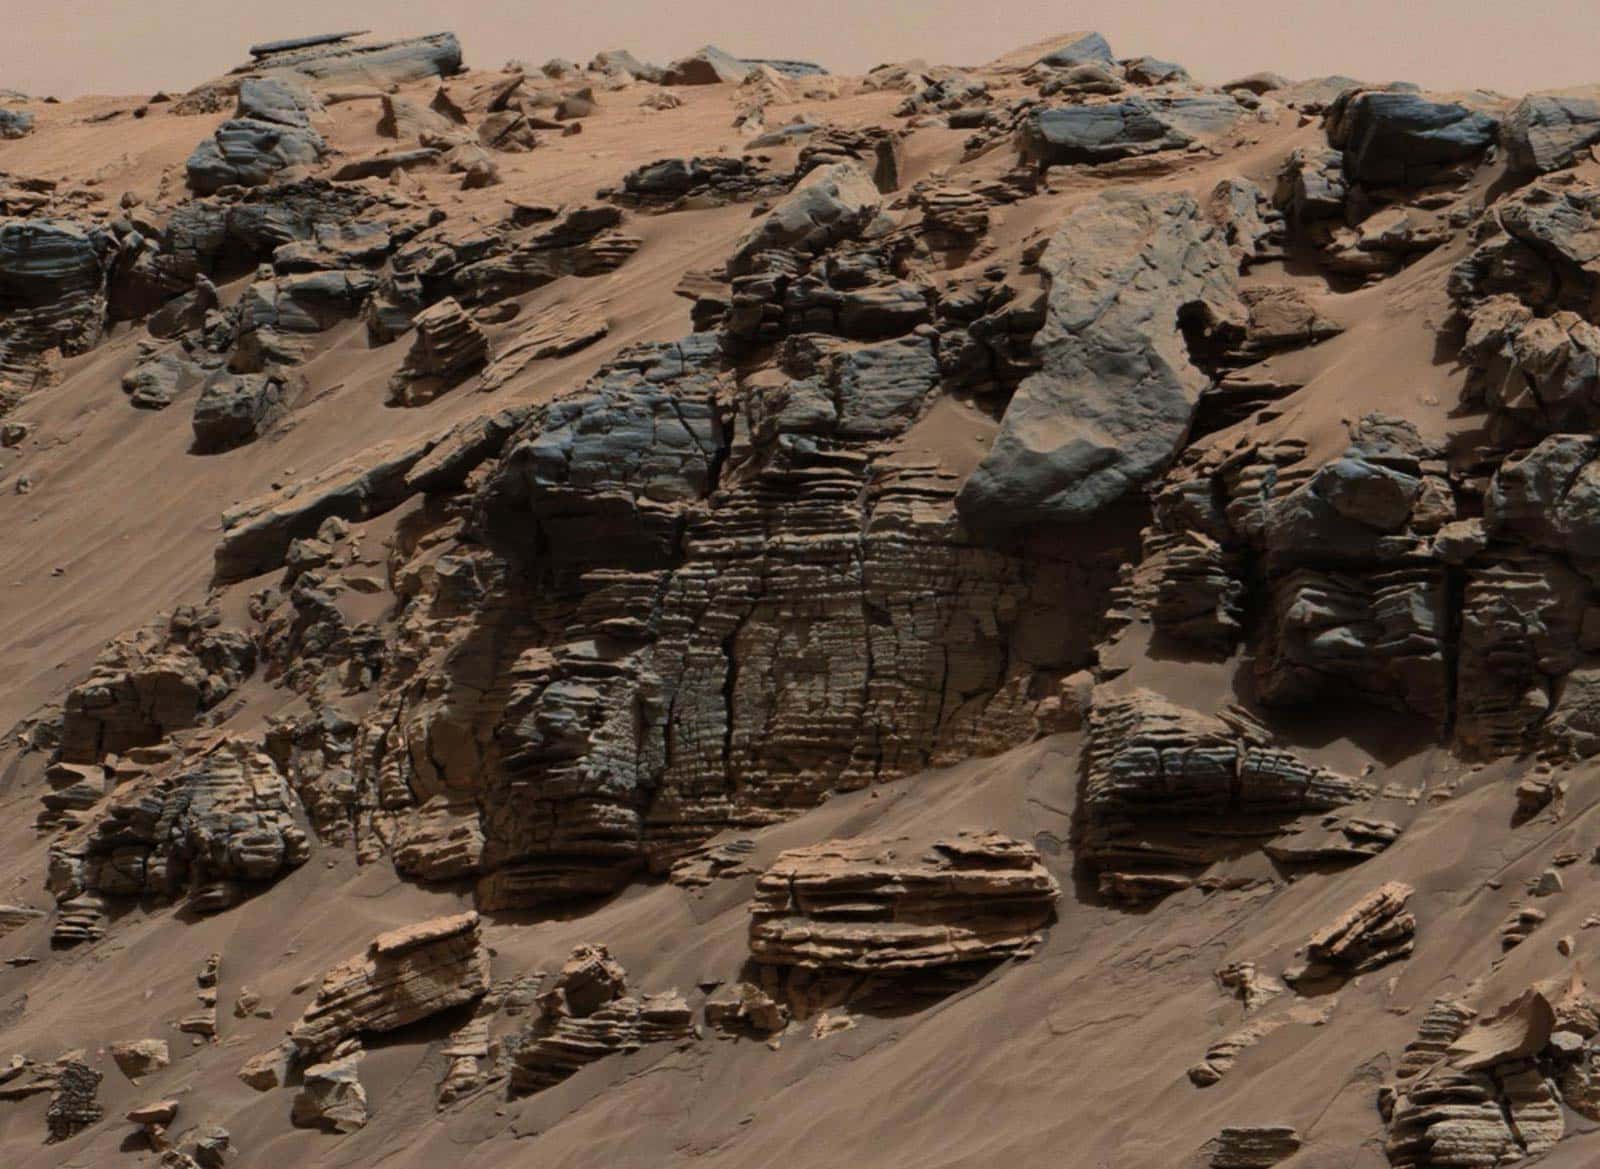 A shot of sedimentary rocks on Mars